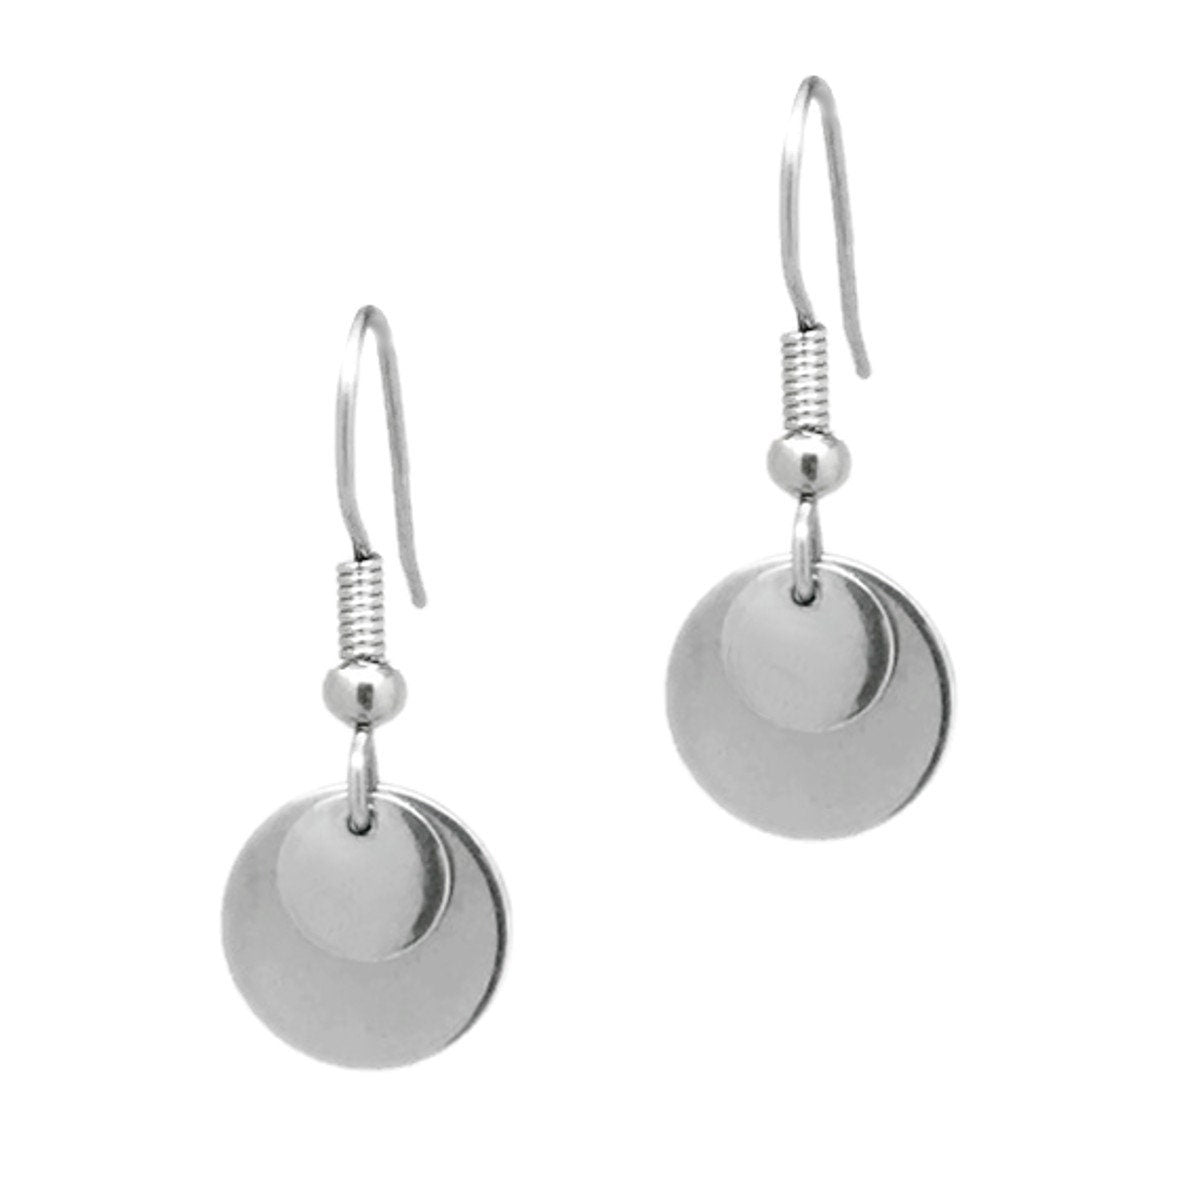 Stainless Steel Earrings Dangle, Silver Circle Earrings, Gift for Girlfriend, Small Drop Earrings, Jewelry for Sensitive Skin